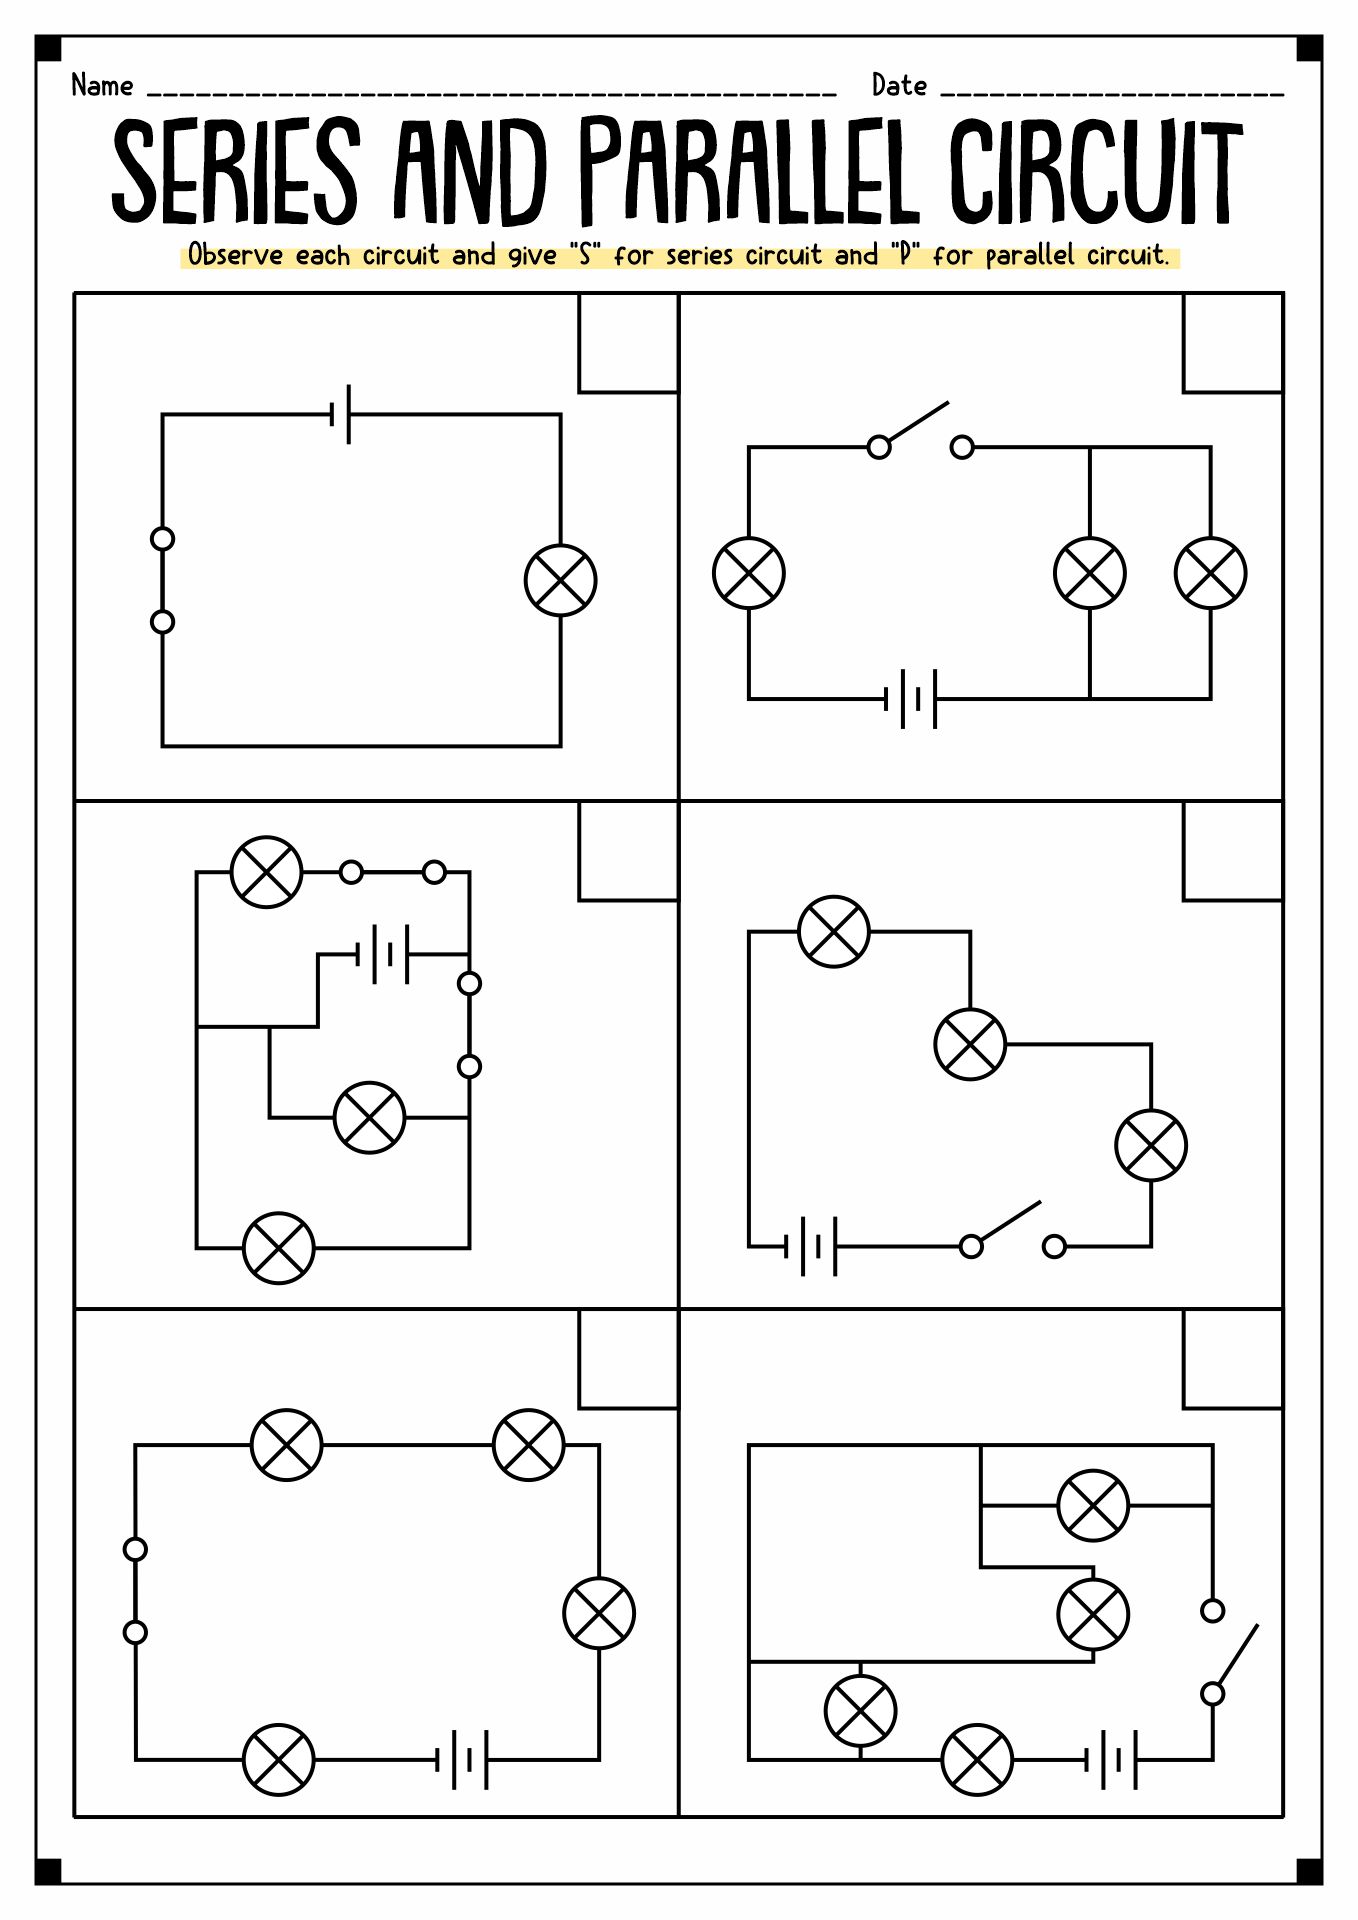 Series and Parallel Circuit Diagram Worksheet